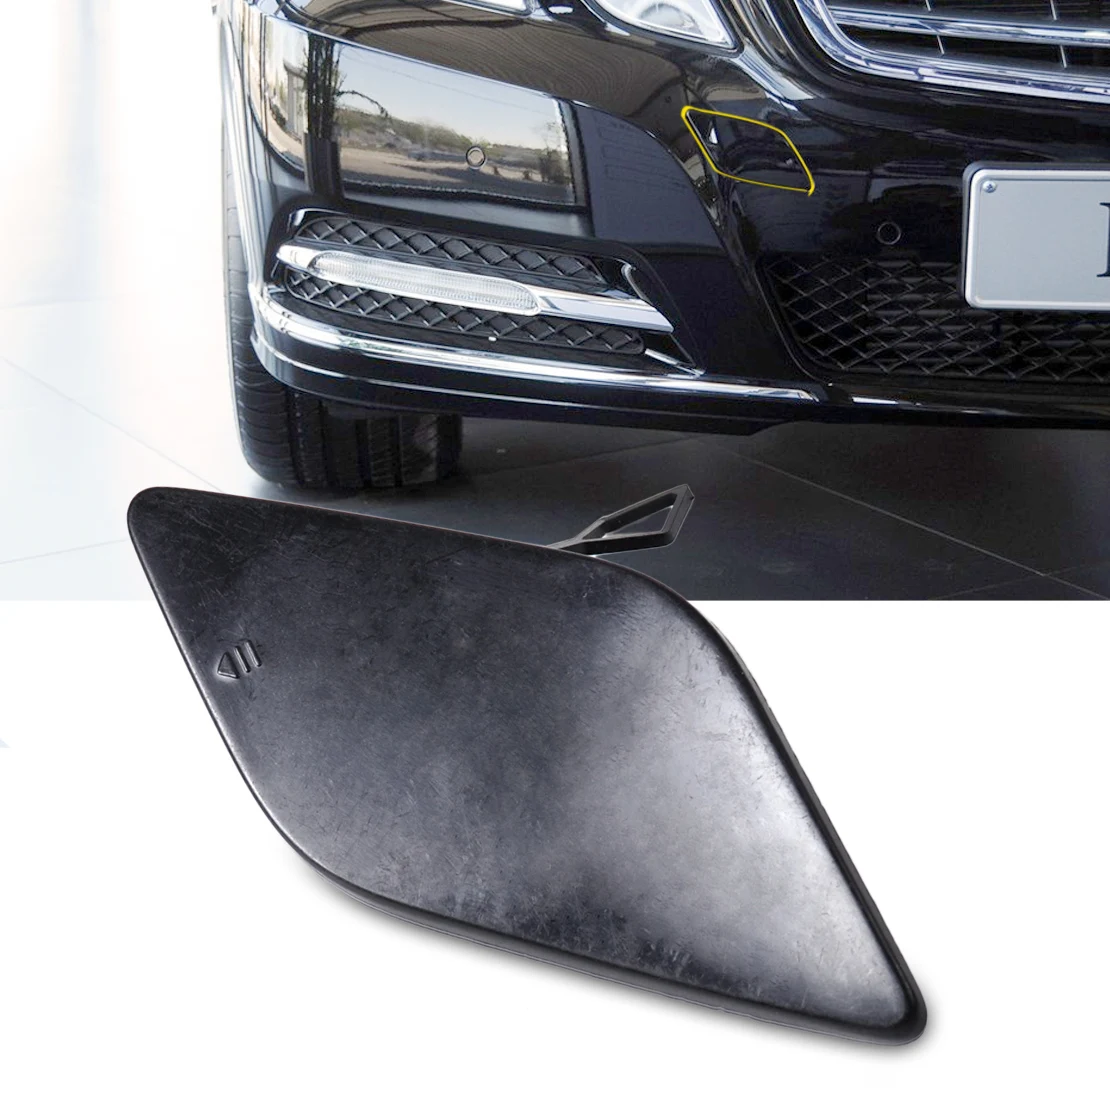 

CITALL Front Bumper Tow Hook Cover Cap Fit for Mercedes Benz E-CLASS W212 E350 E300 E320 E250 E500 E63 212 885 01 26 2128850126